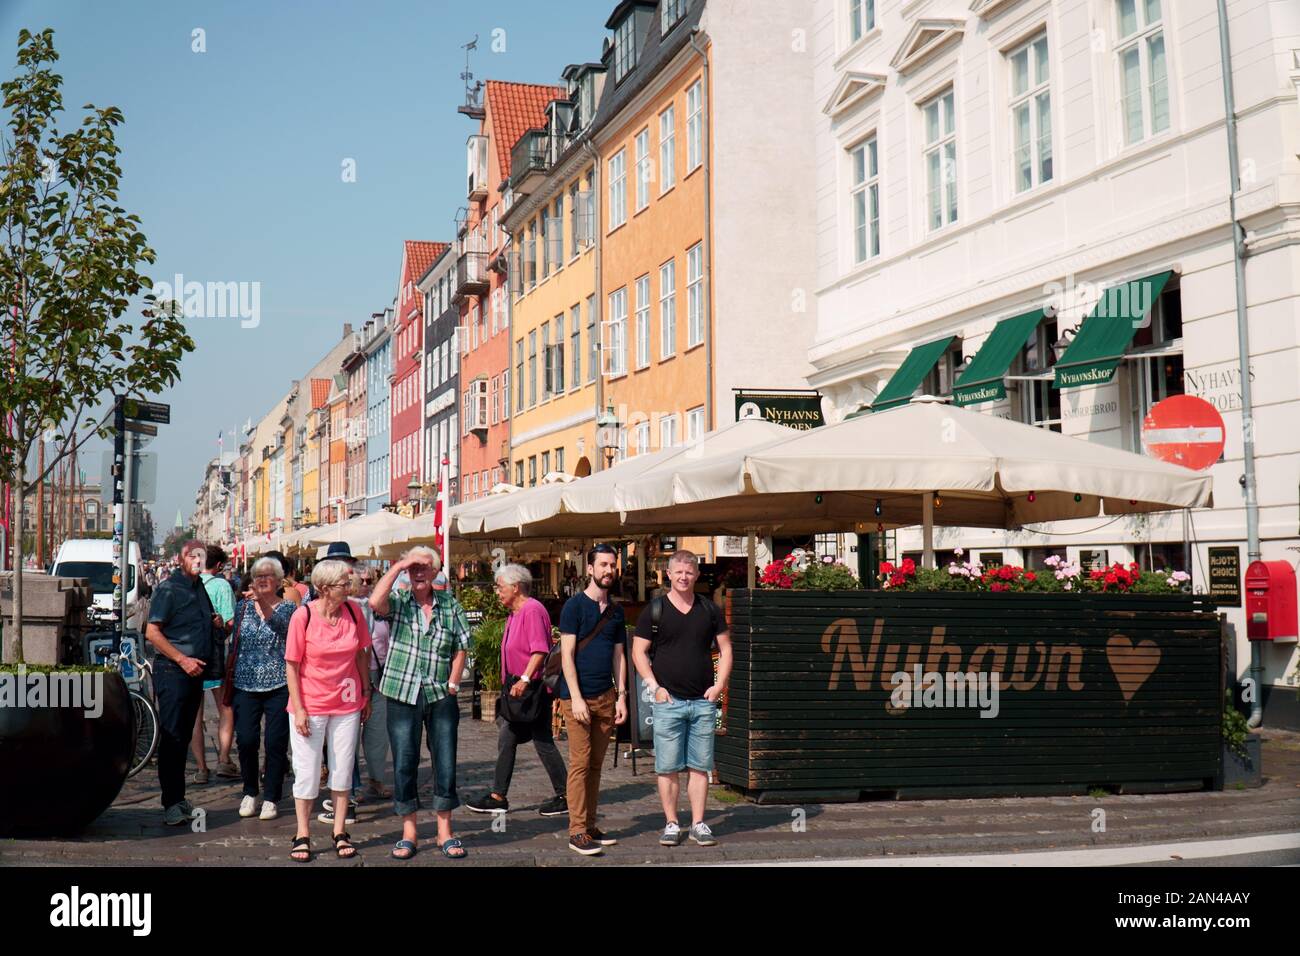 People waiting to cross a road in Nyhavn, Copenhagen Stock Photo